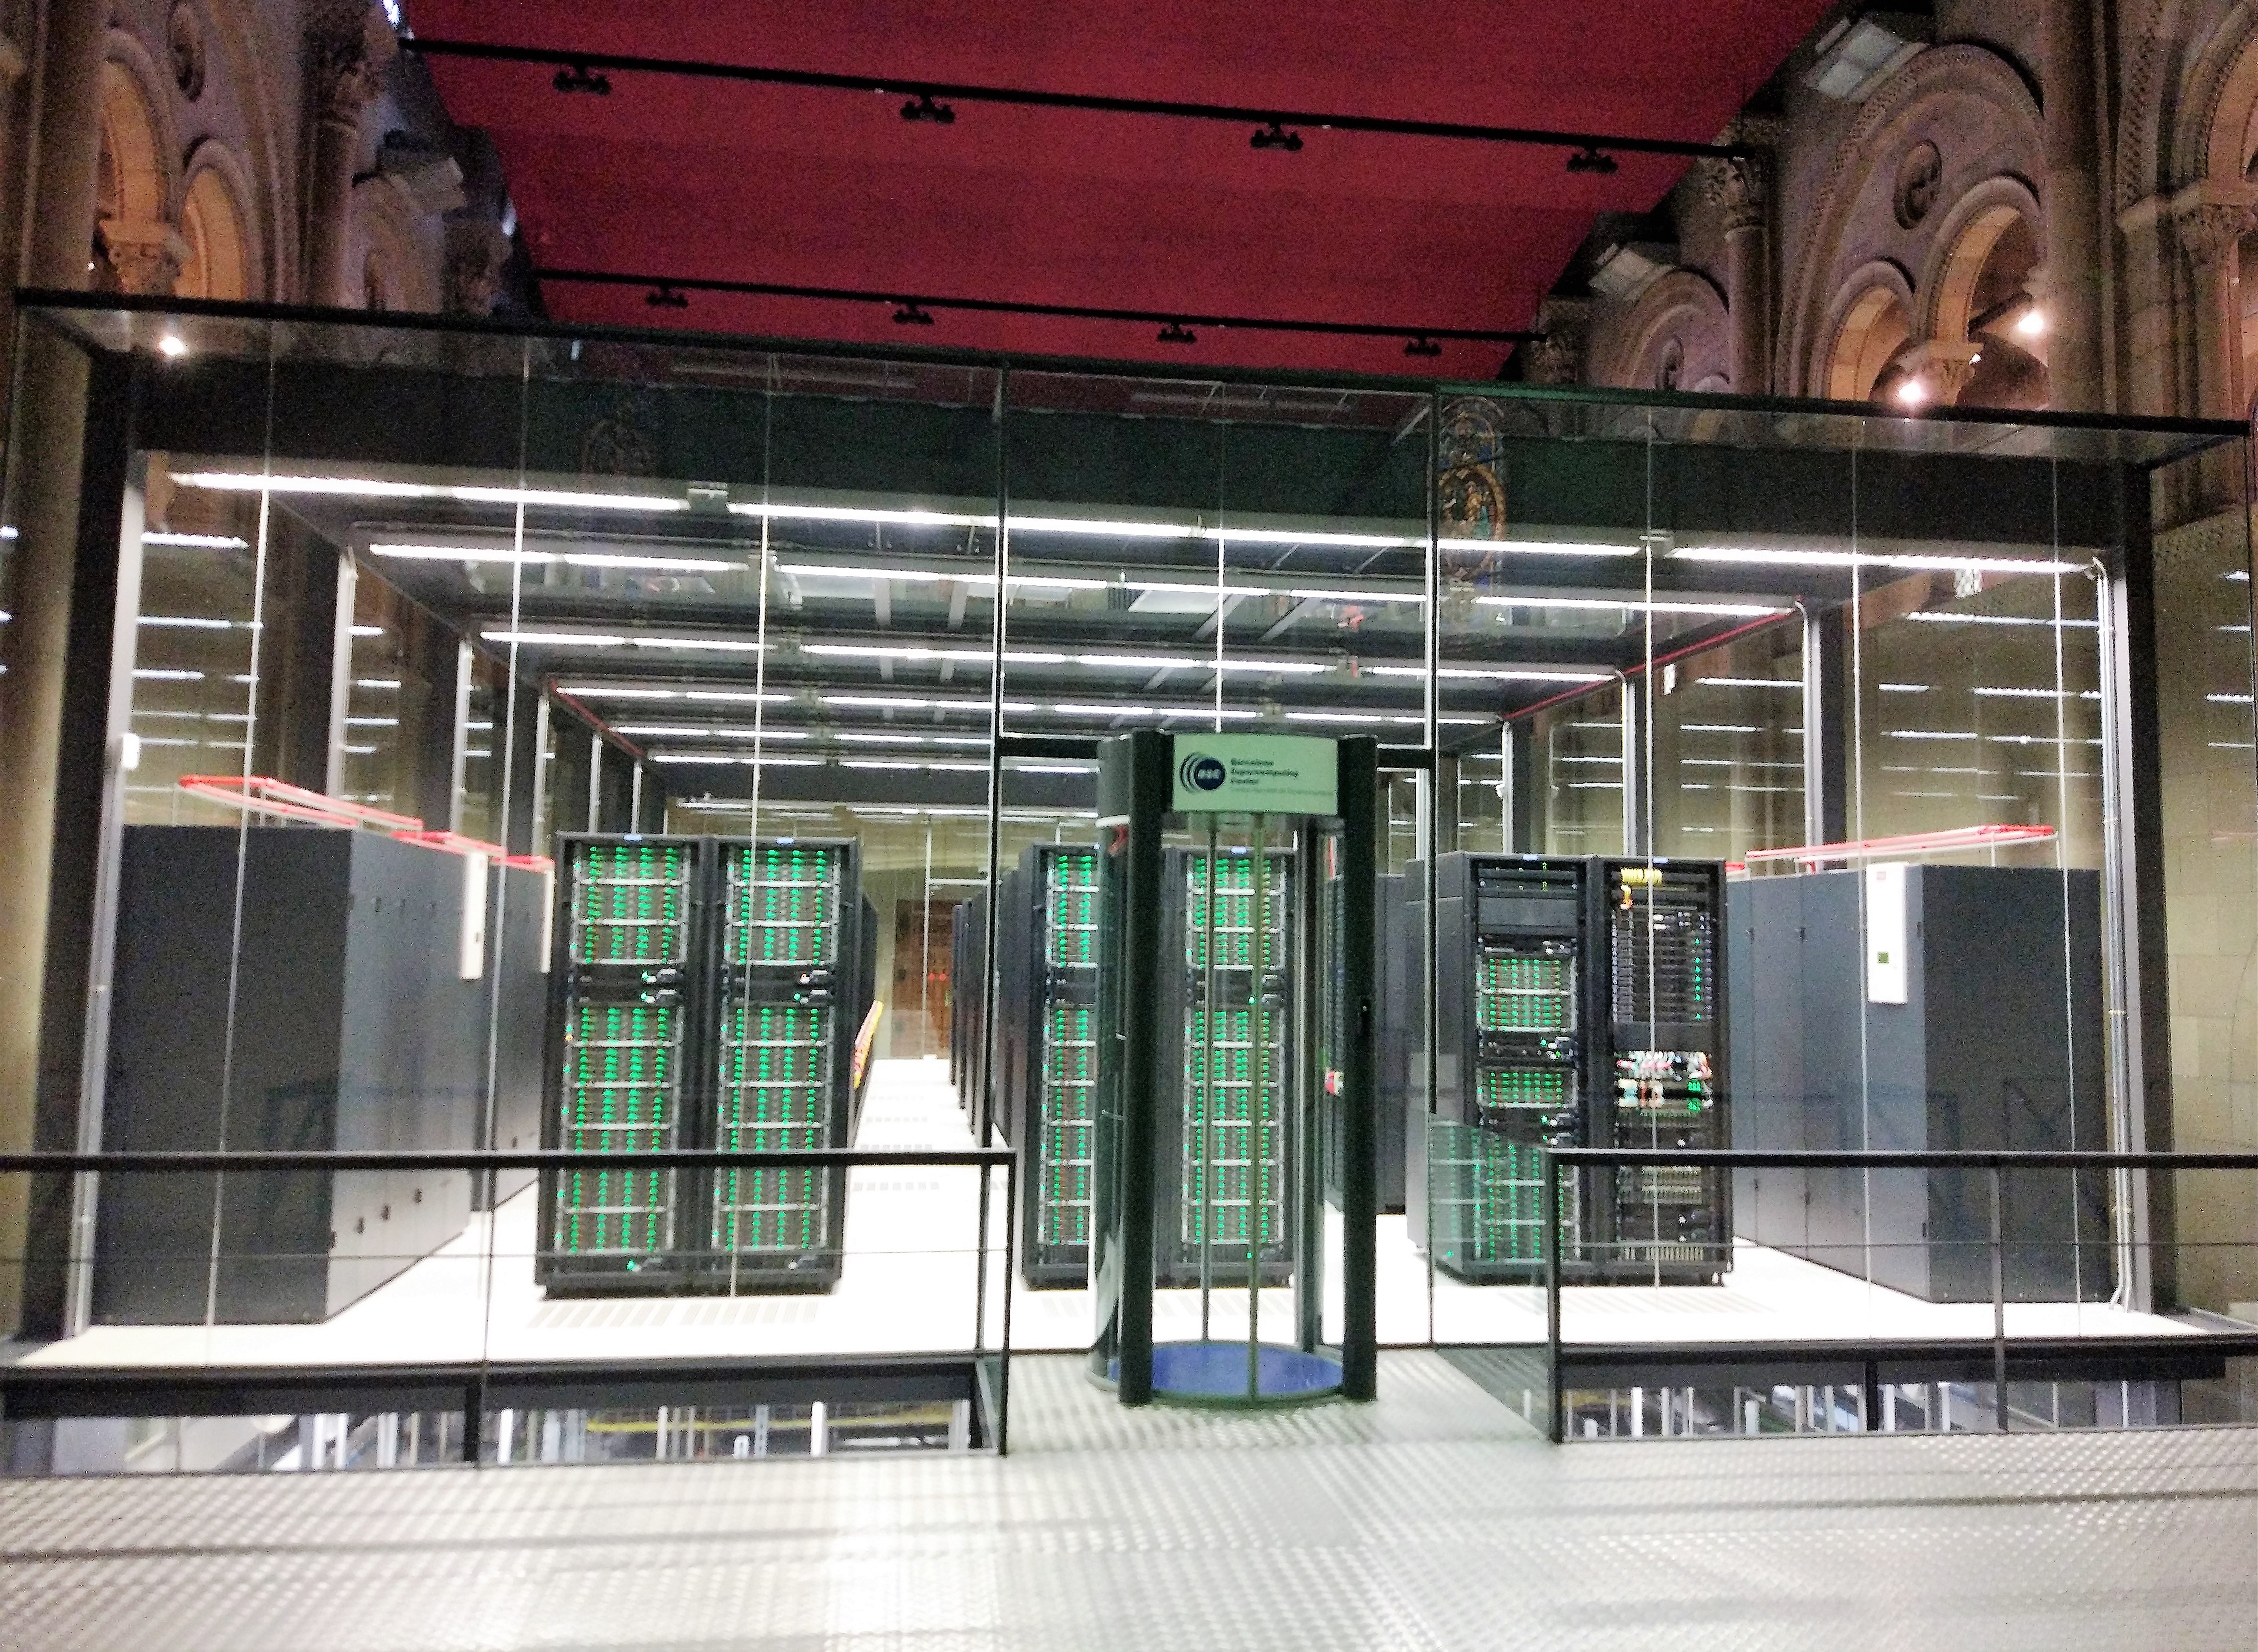 The Barcelona Supercomputing Center, home of the MareNostrum supercomputer